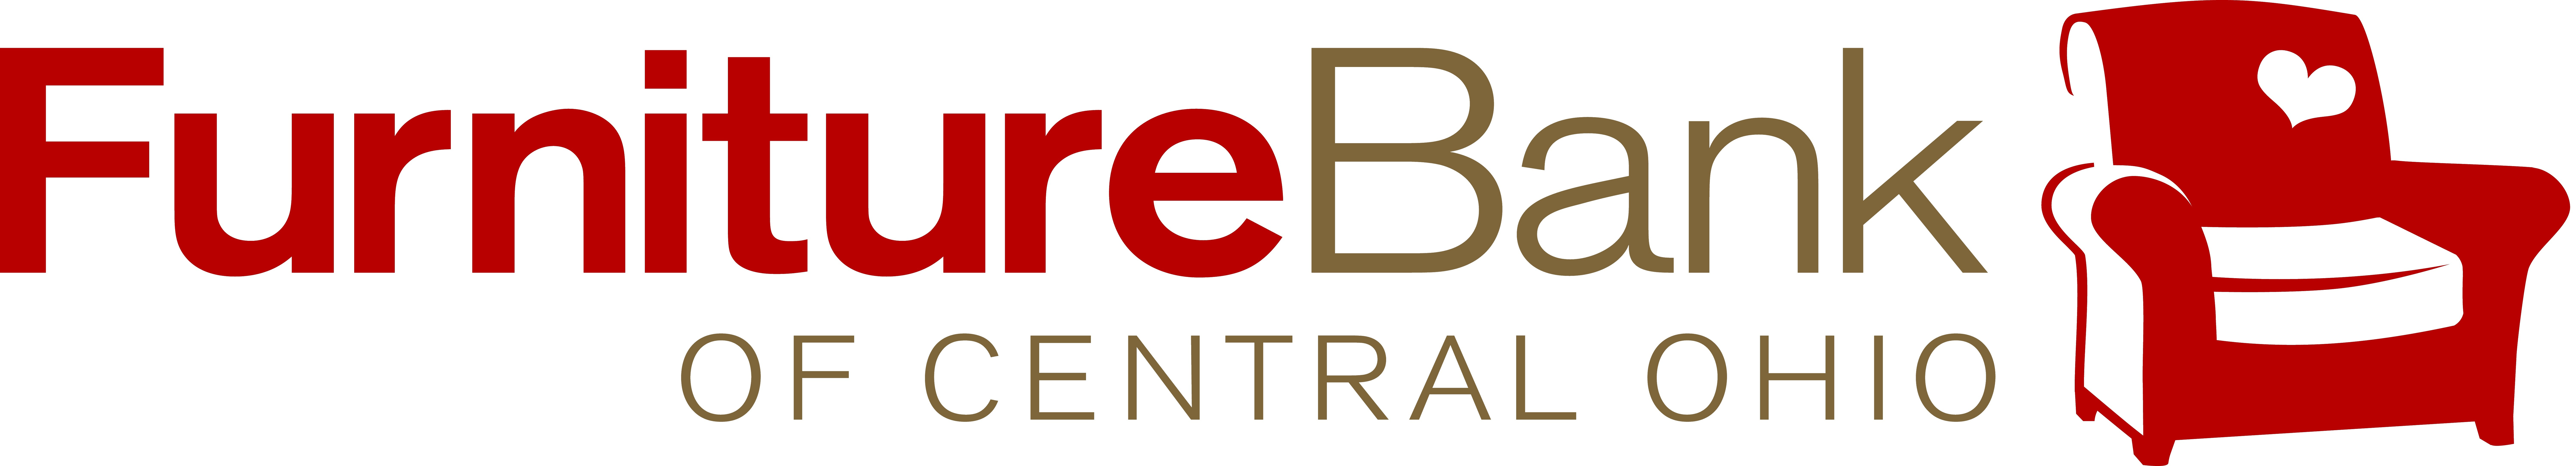 Furniture Bank of Central Ohio Logo 23.jpg (728 kb)